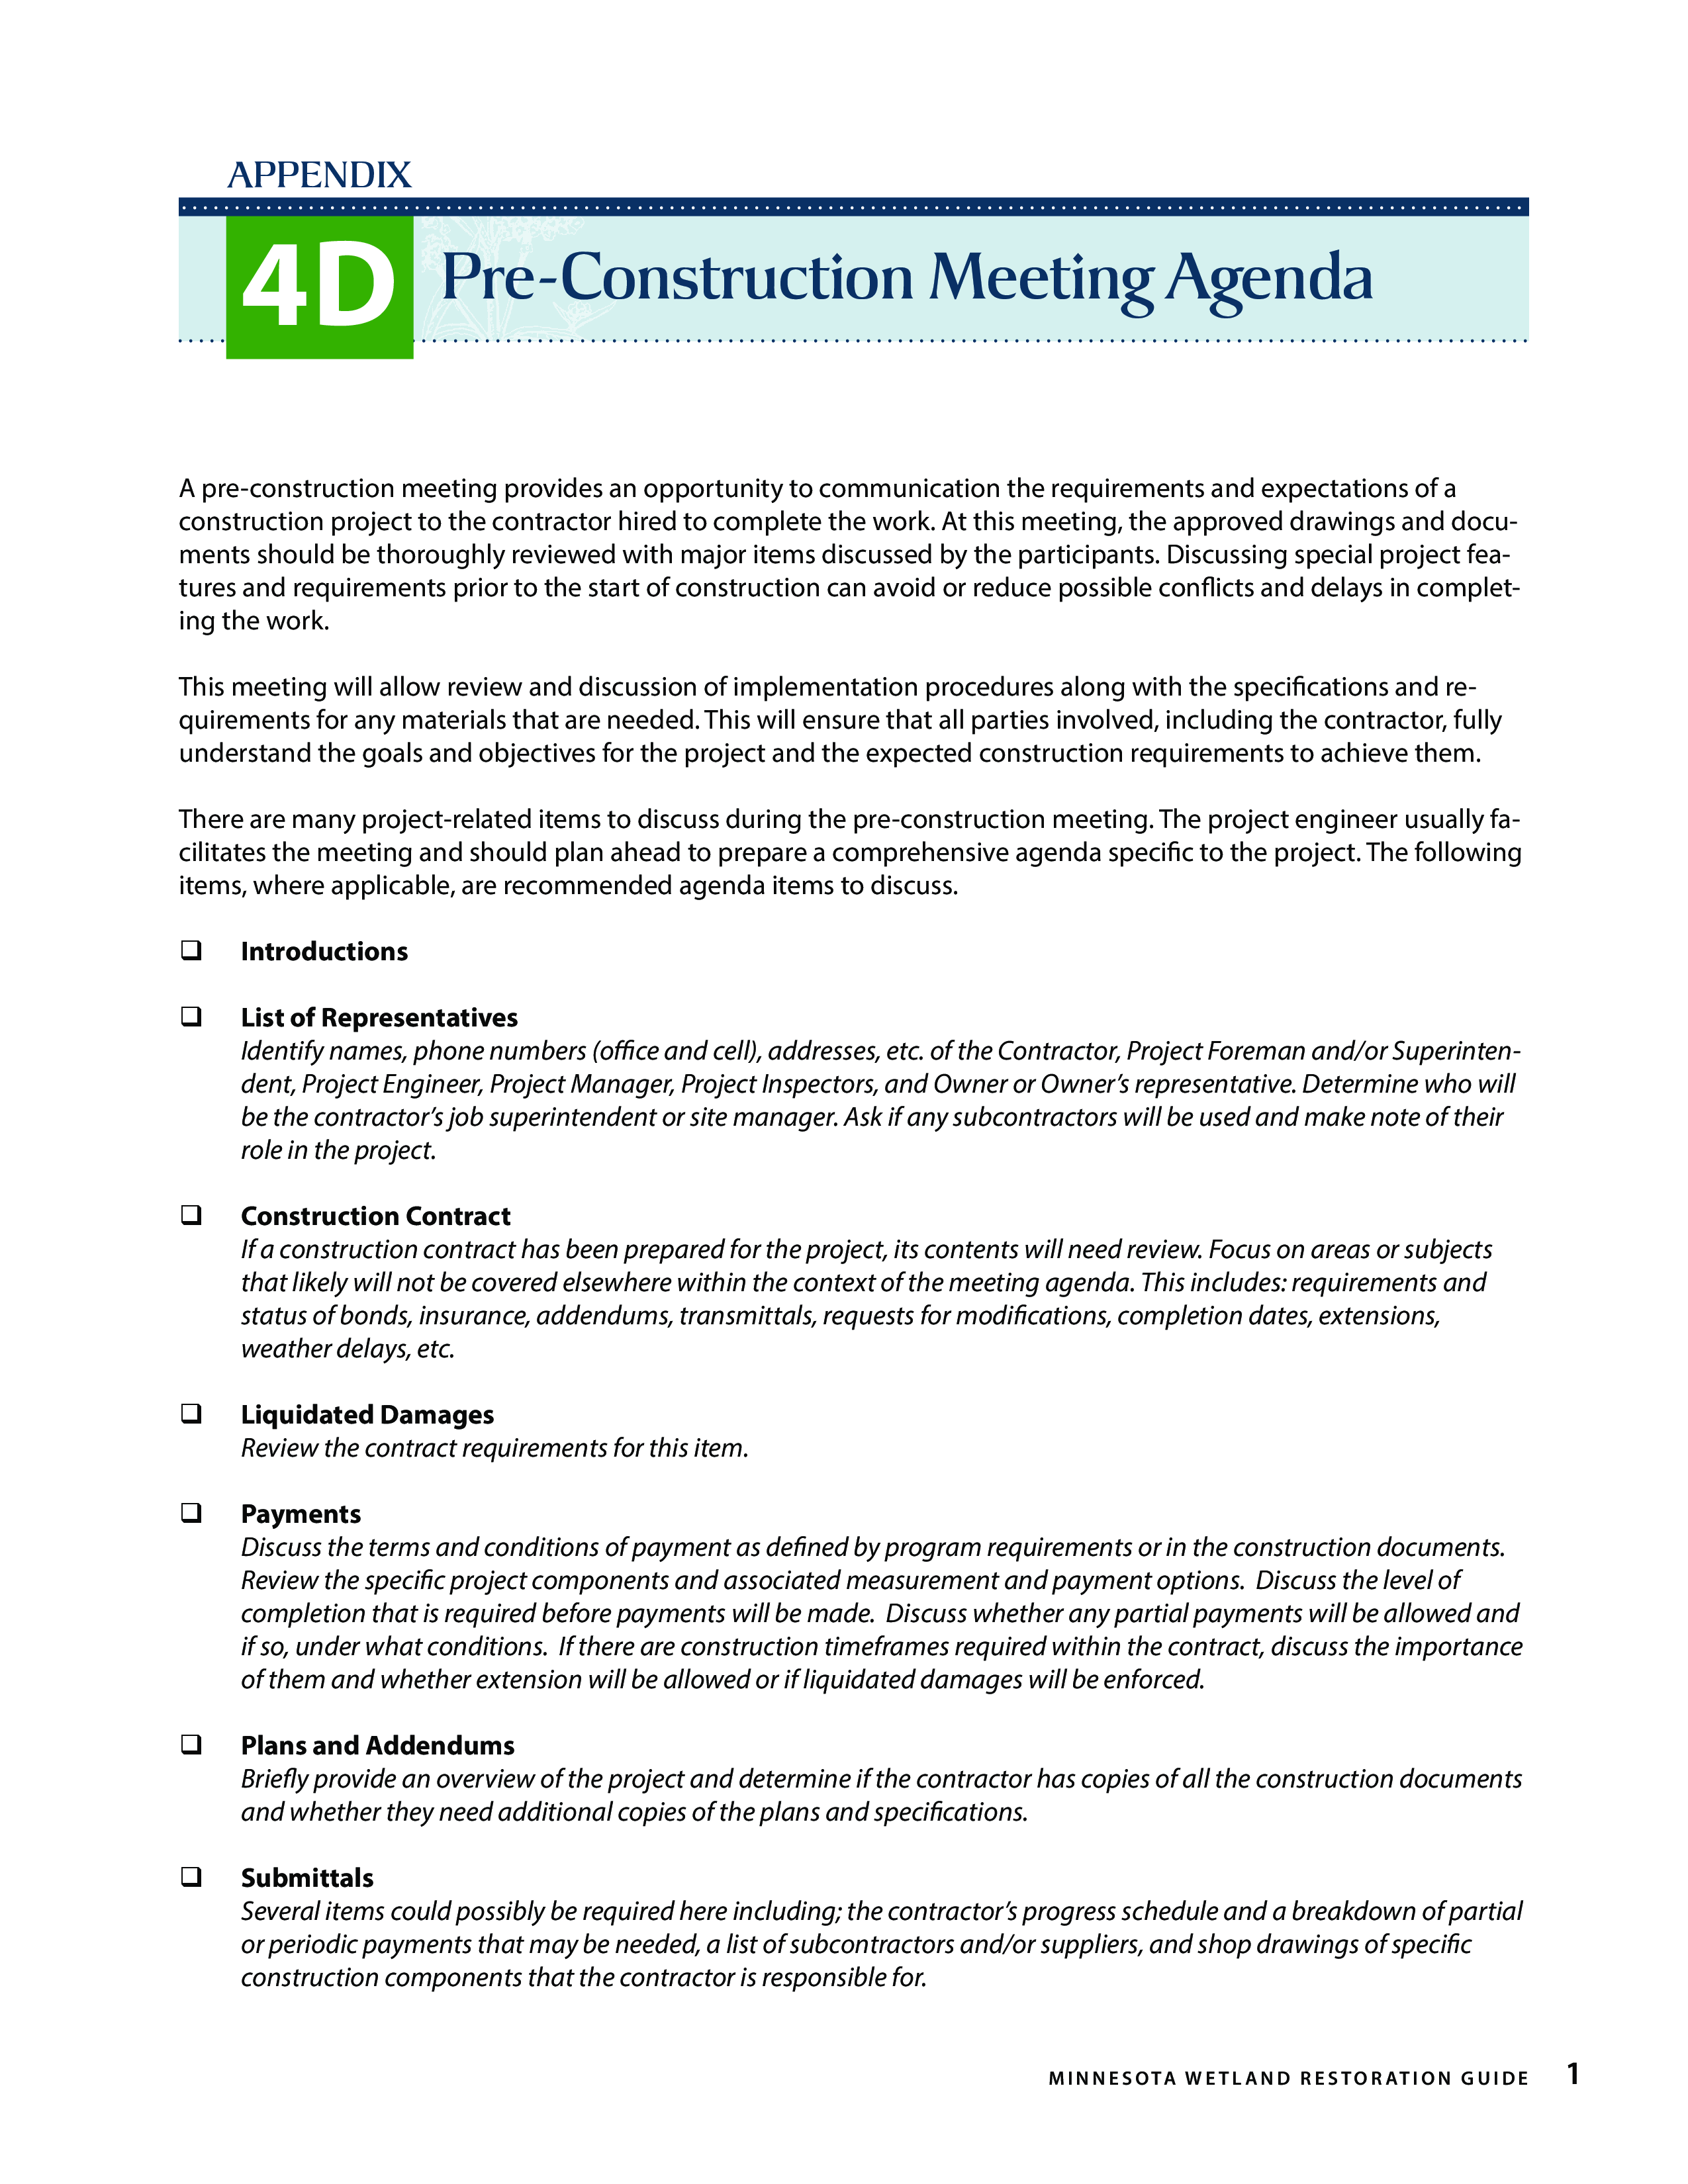 Pre Construction Meeting Agenda Templates at